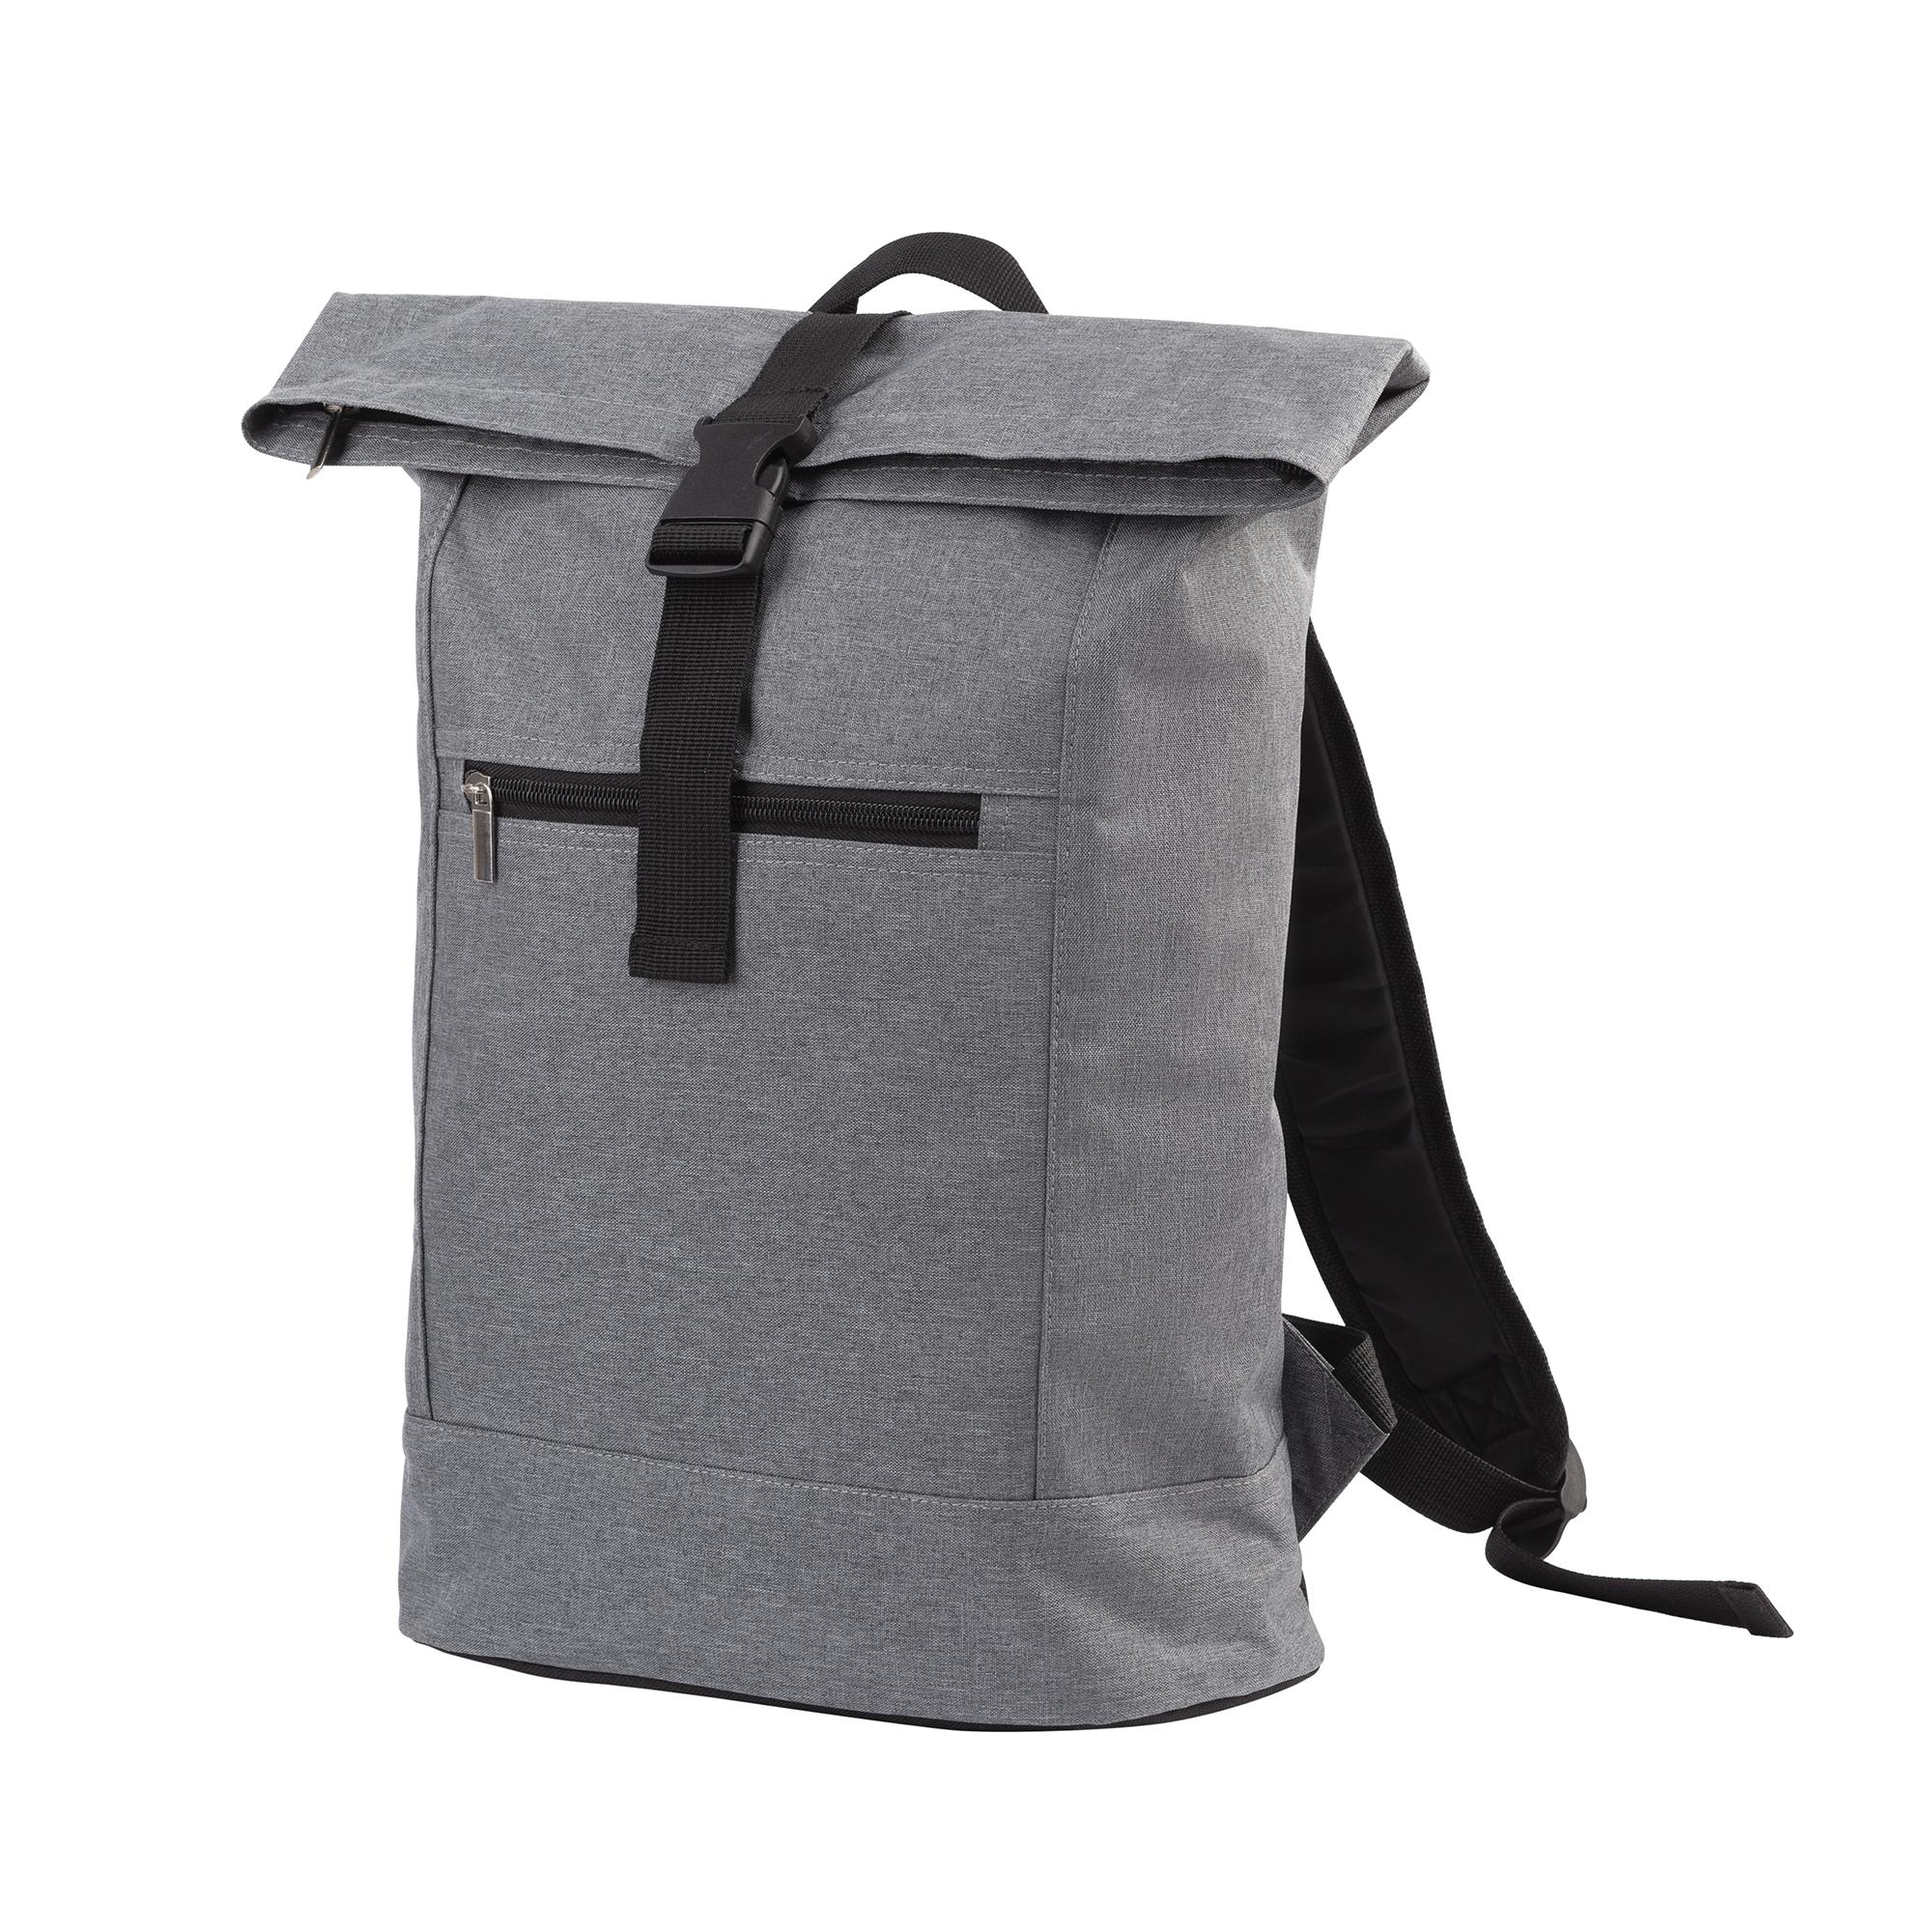 Рюкзак "Easybag", серый, арт. 6054 - вид 1 из 4